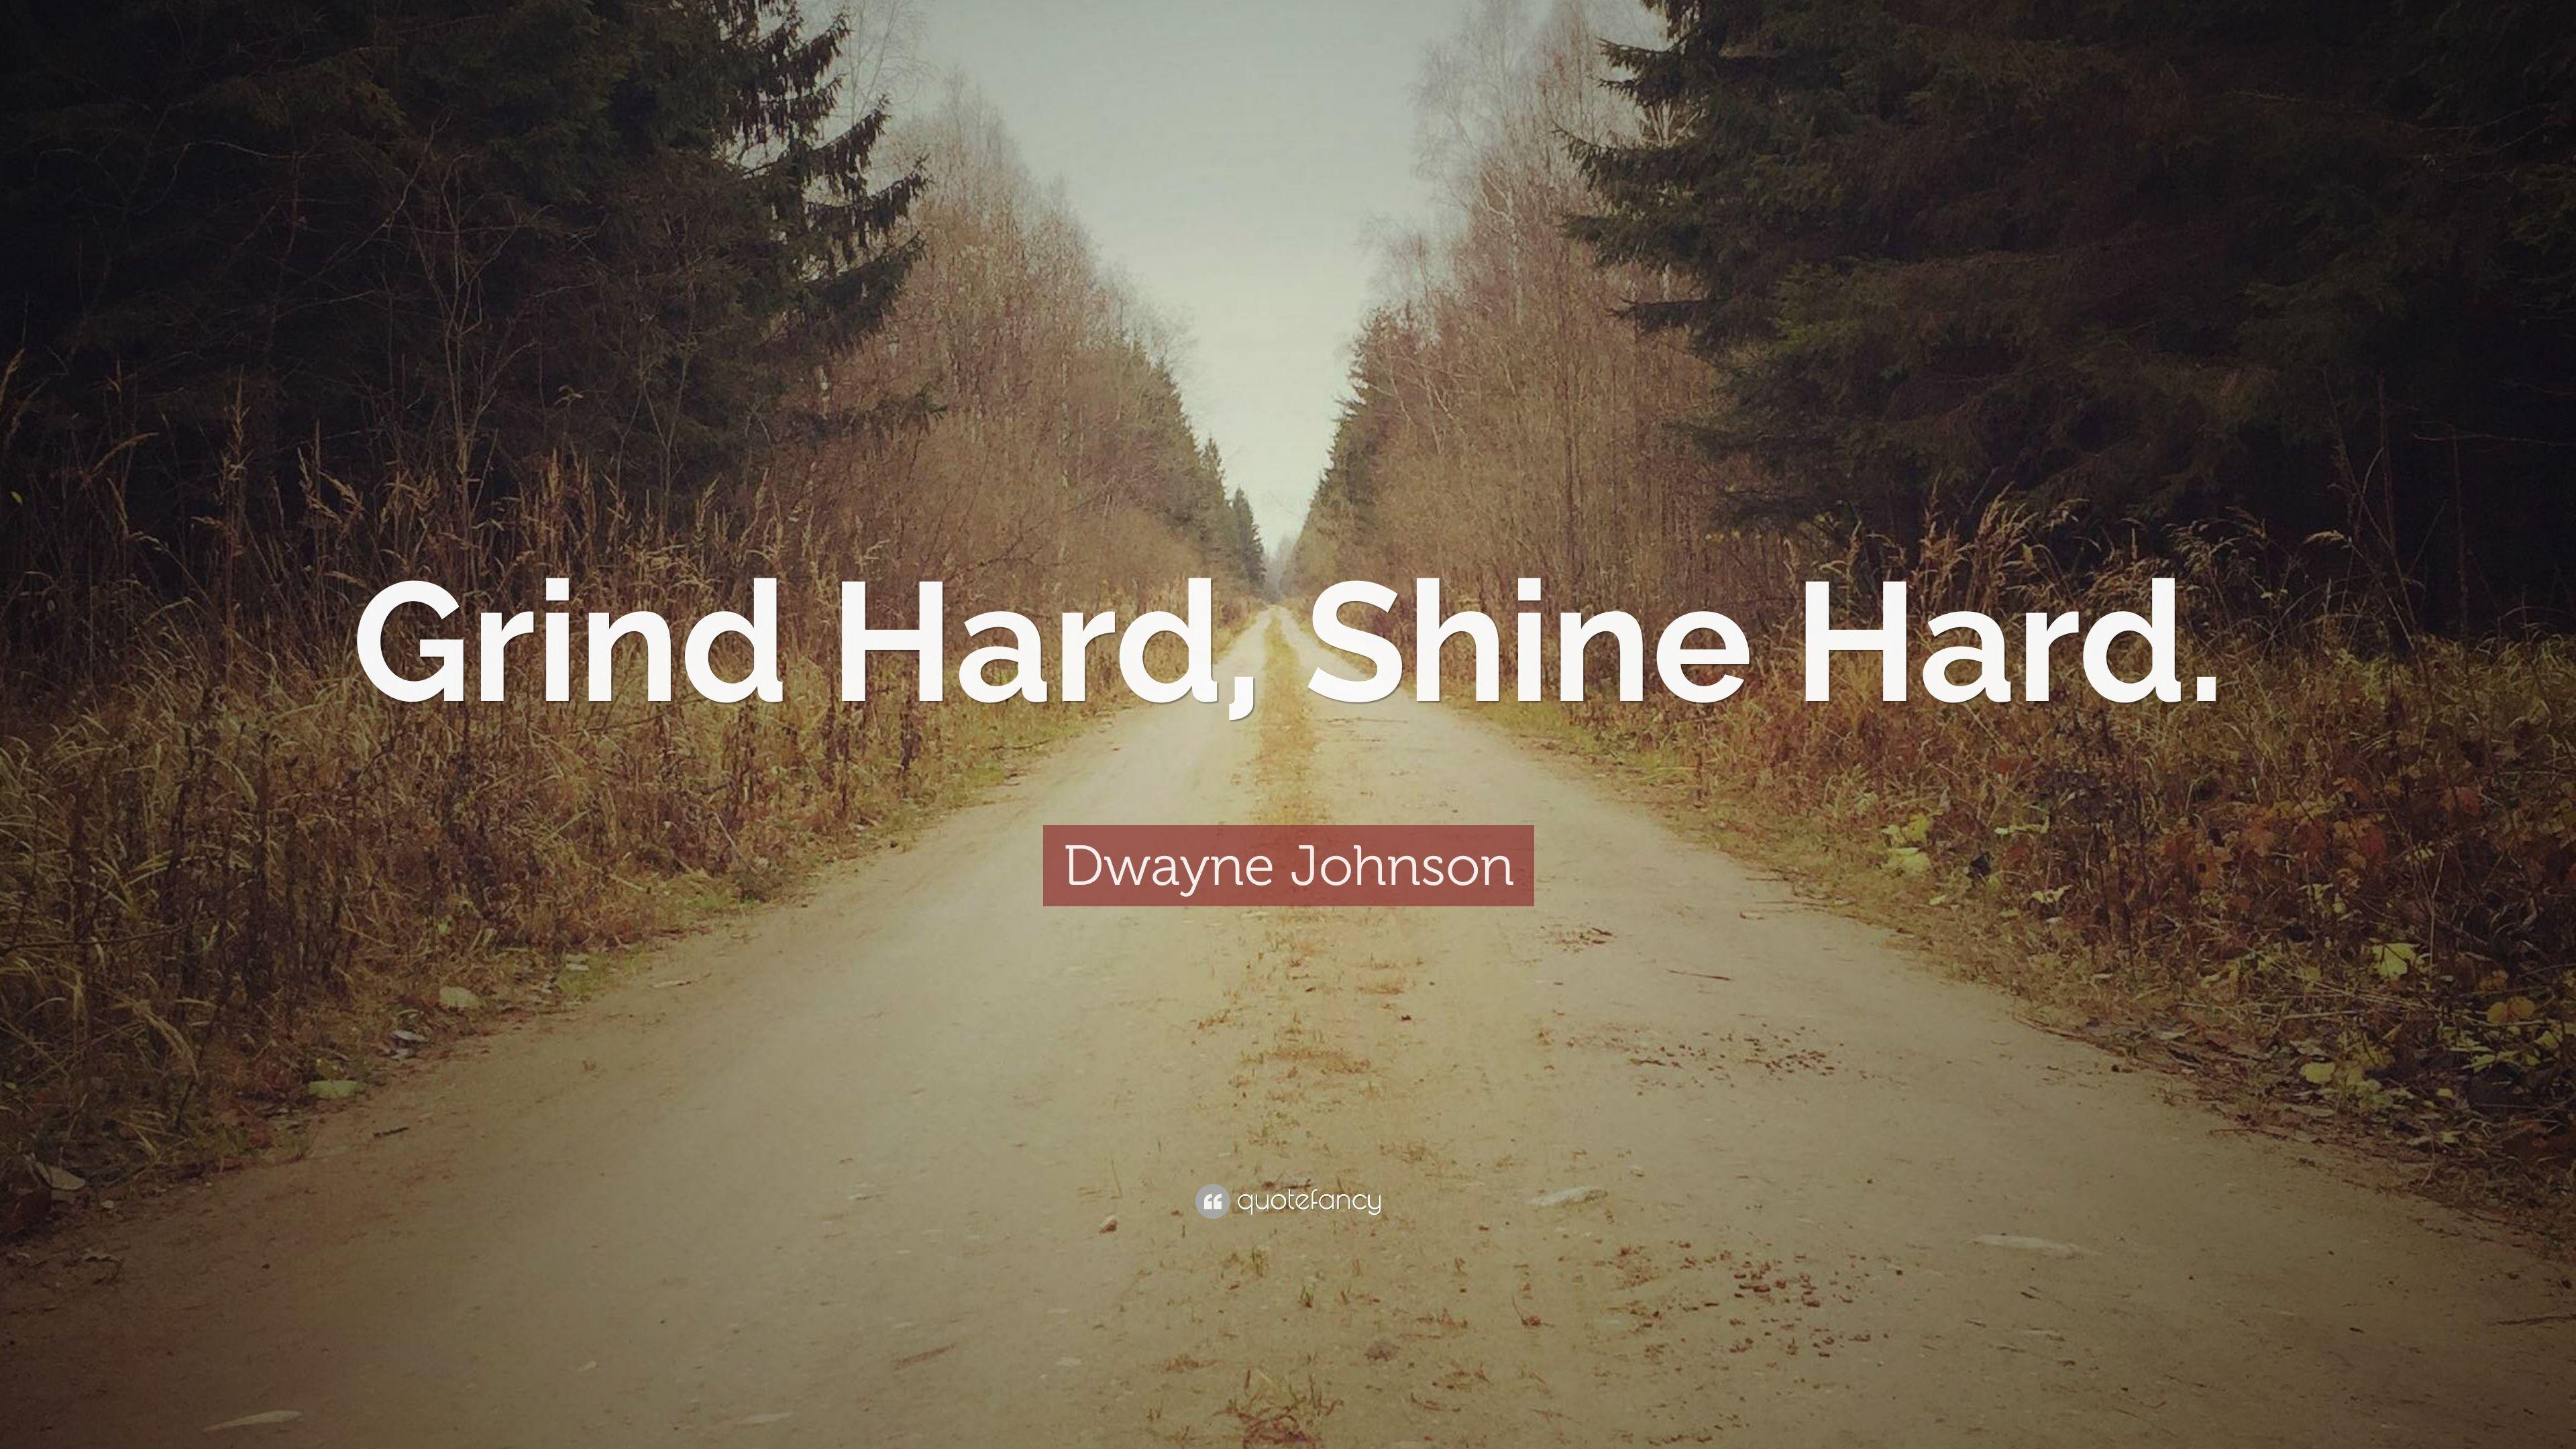 Dwayne Johnson Quote: “Grind Hard, Shine Hard.” 12 wallpaper